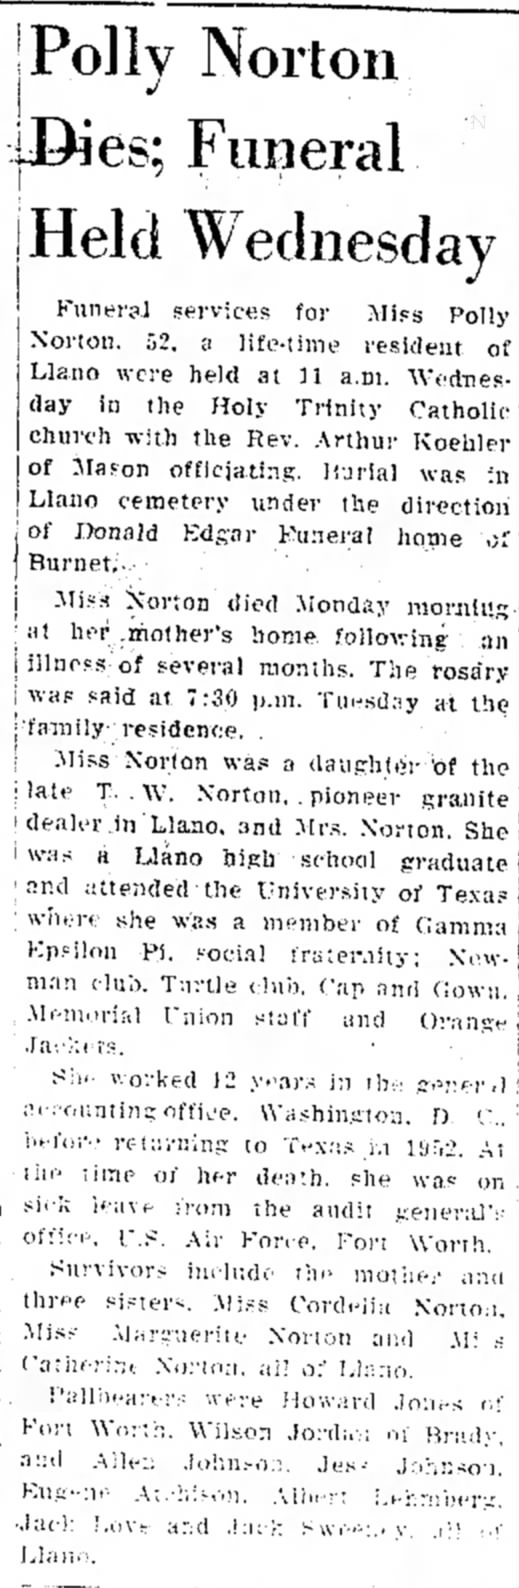 Obit of Polly Norton - dau of Thos Norton - Llano News  15 Apr 1954